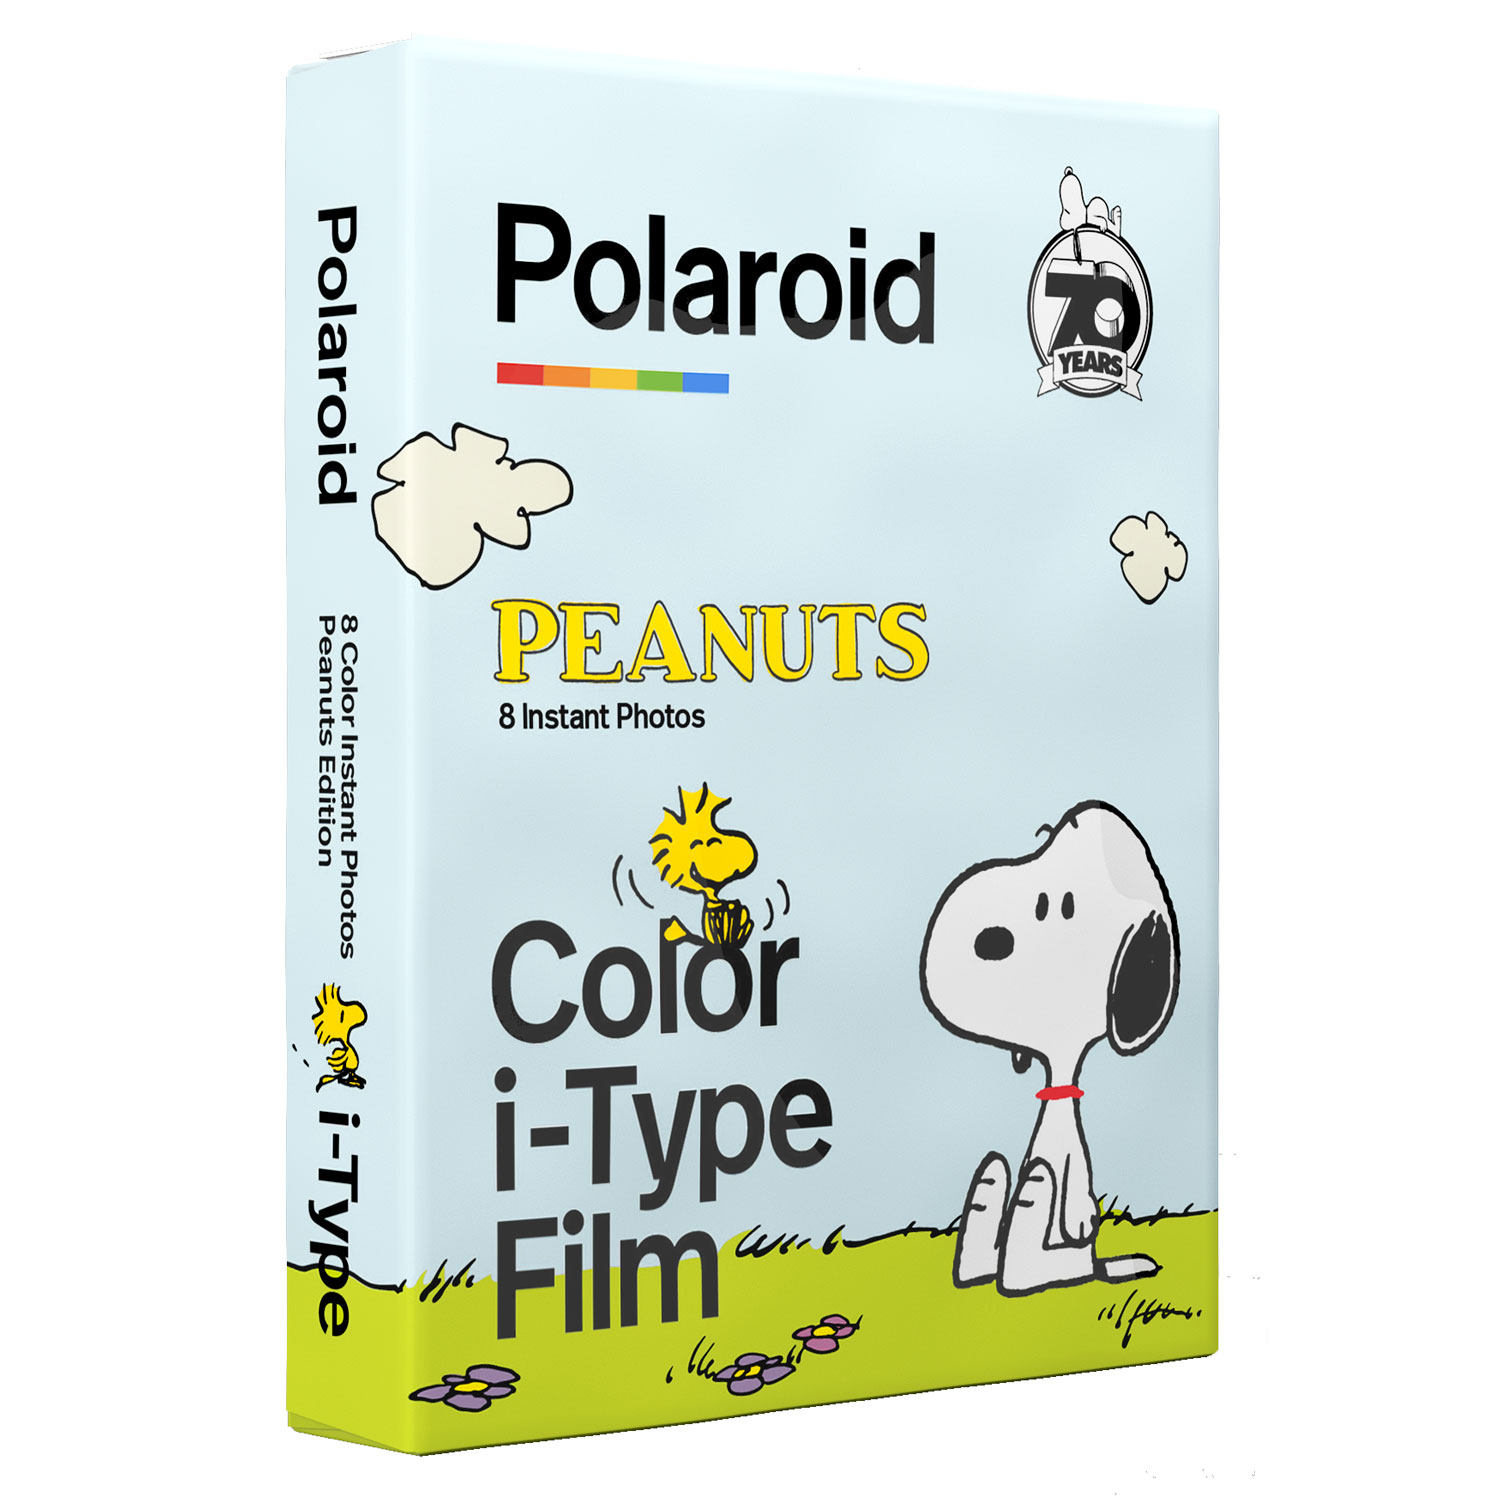 Polaroid Color Film for i-Type Peanuts Edition 